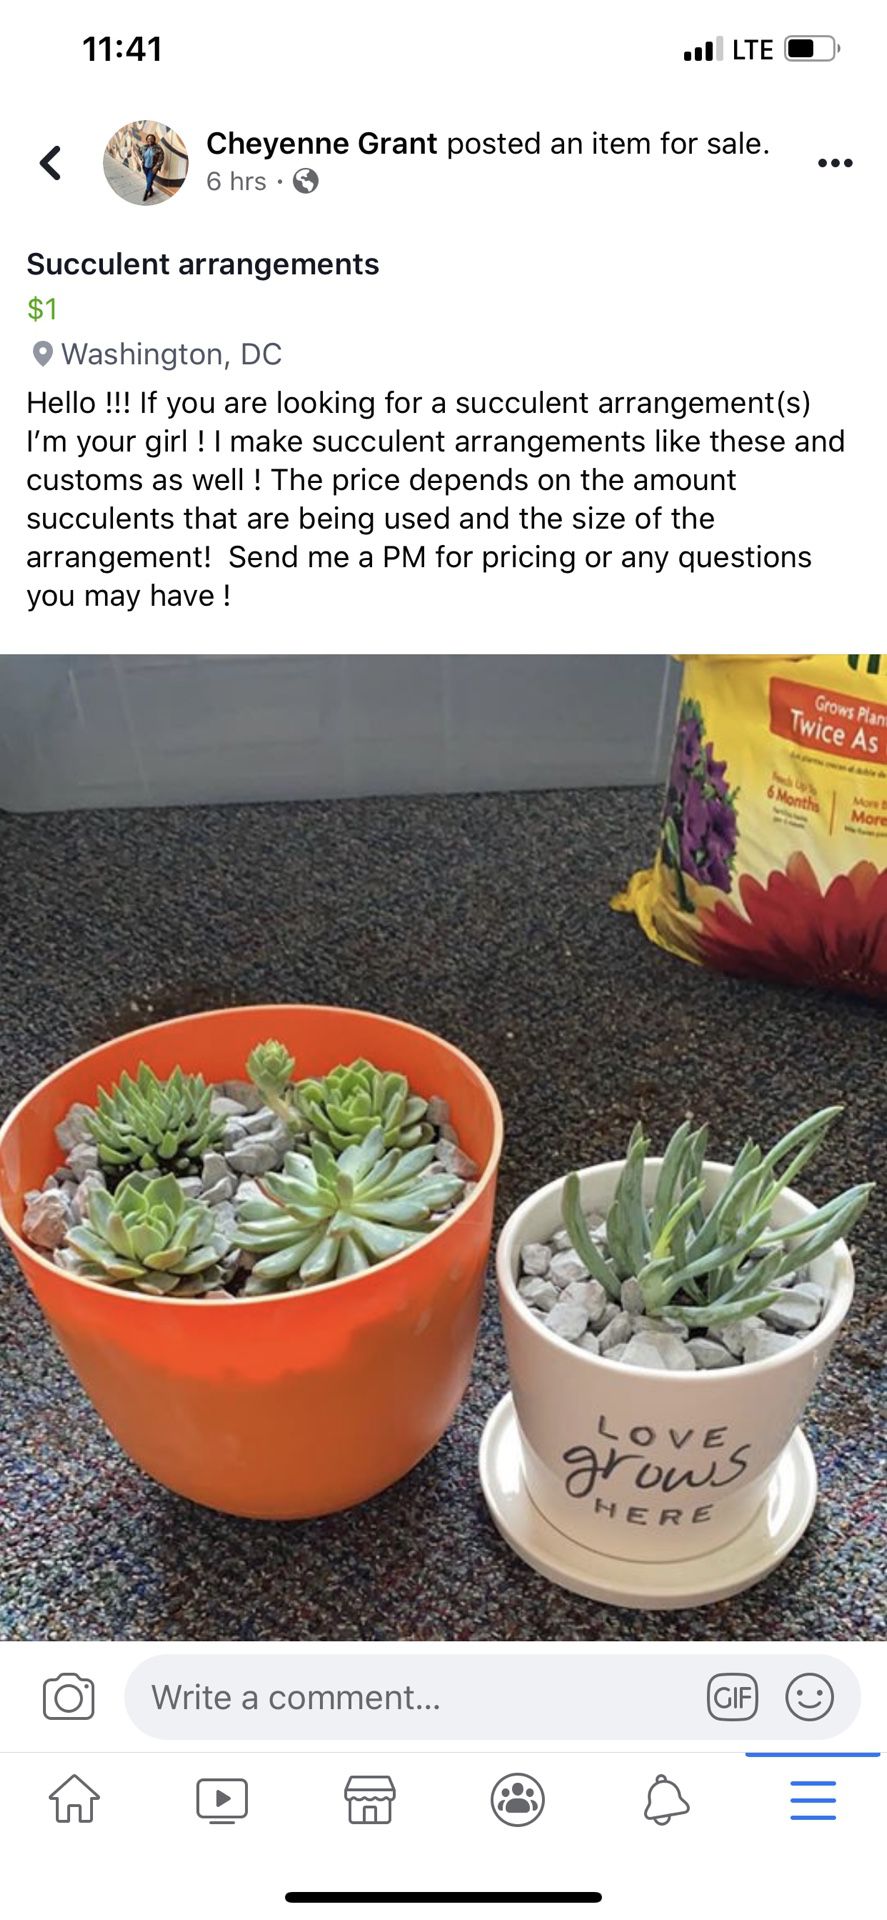 Succulent arrangements